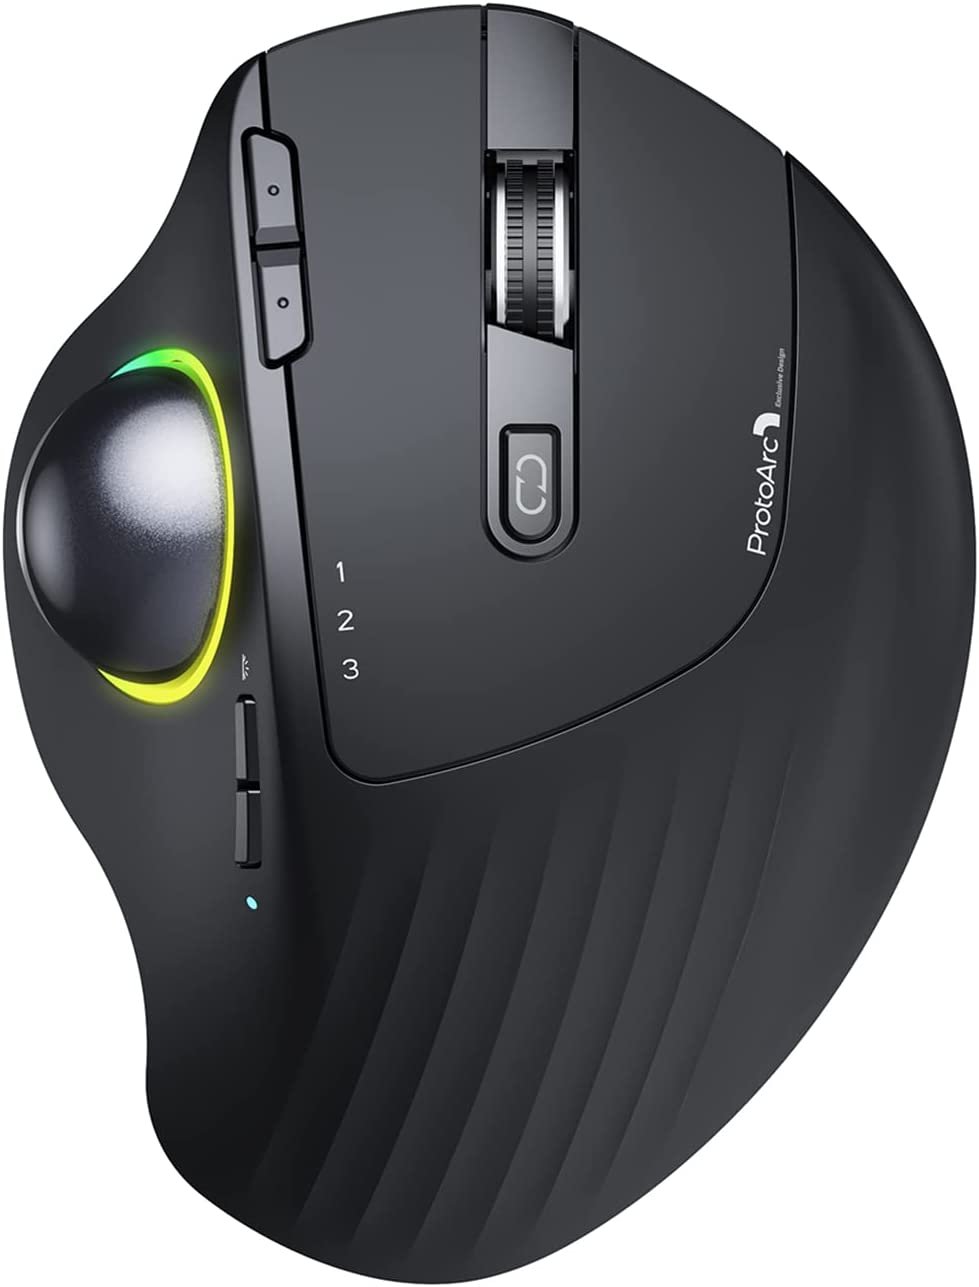 eteknix.com - ProtoArc Bluetooth Trackball Mouse Wireless RGB